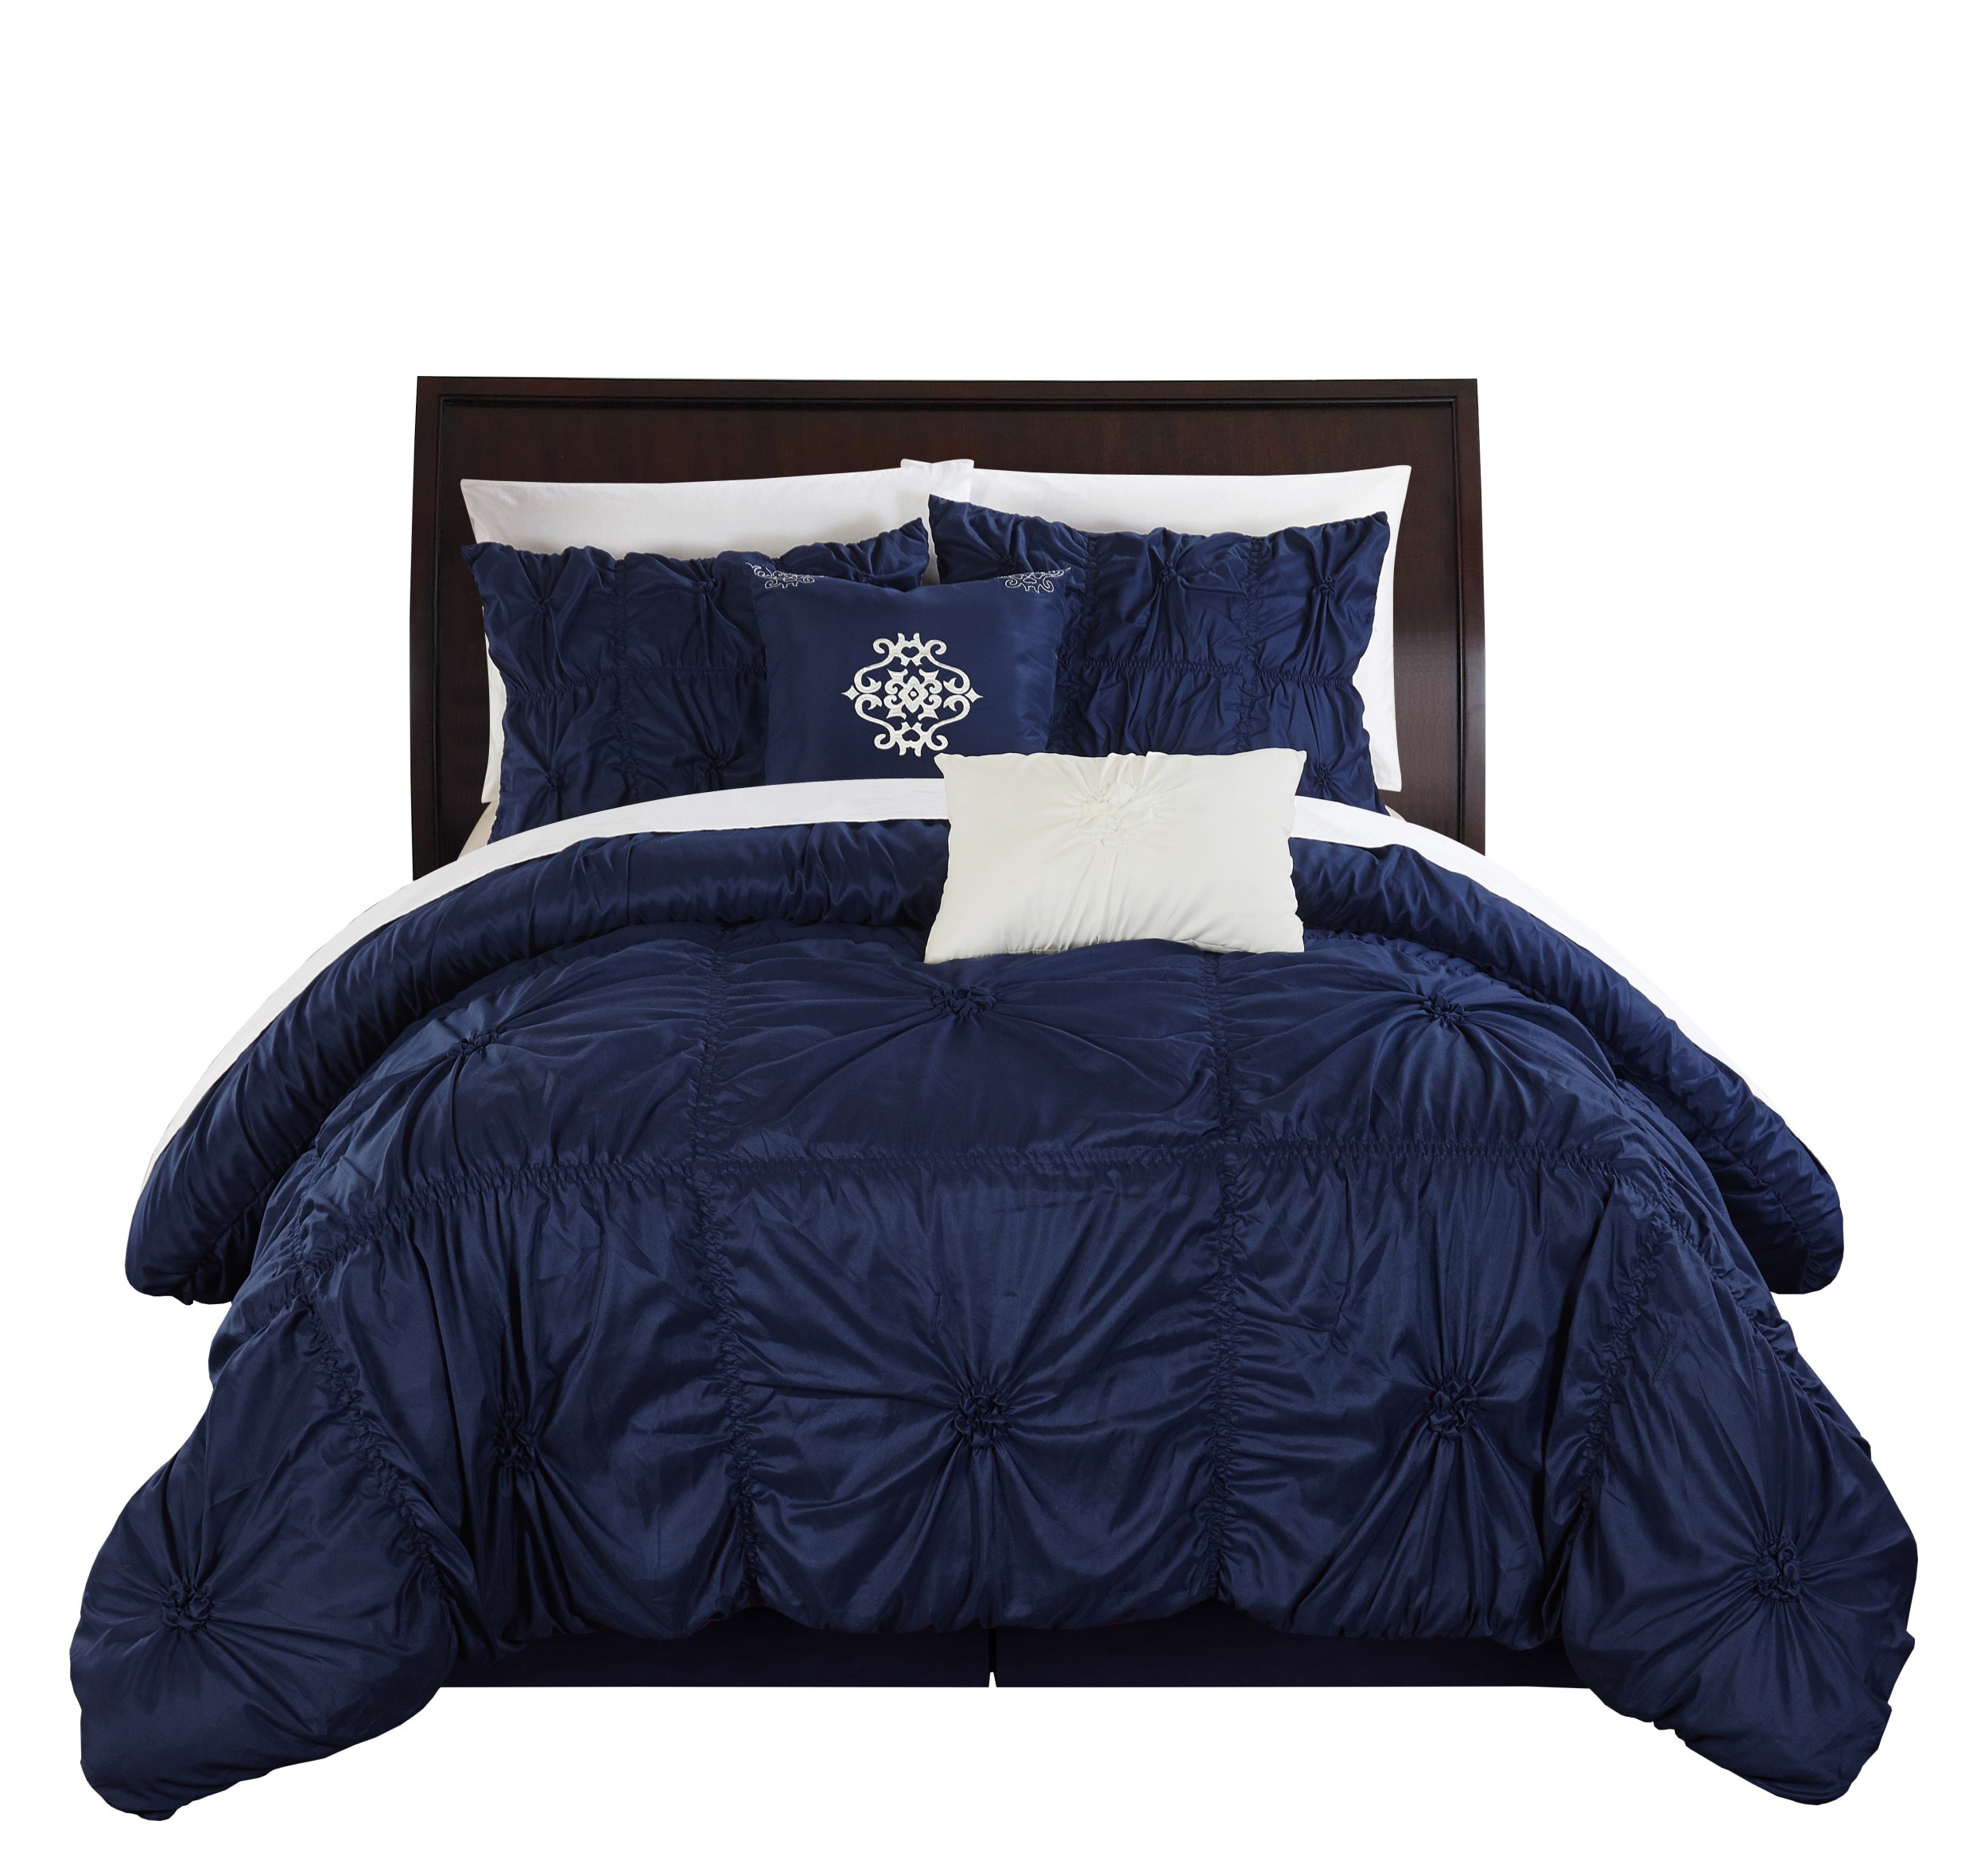 Chic Home Design Halpert 6-Piece Navy King Comforter Set in the Bedding